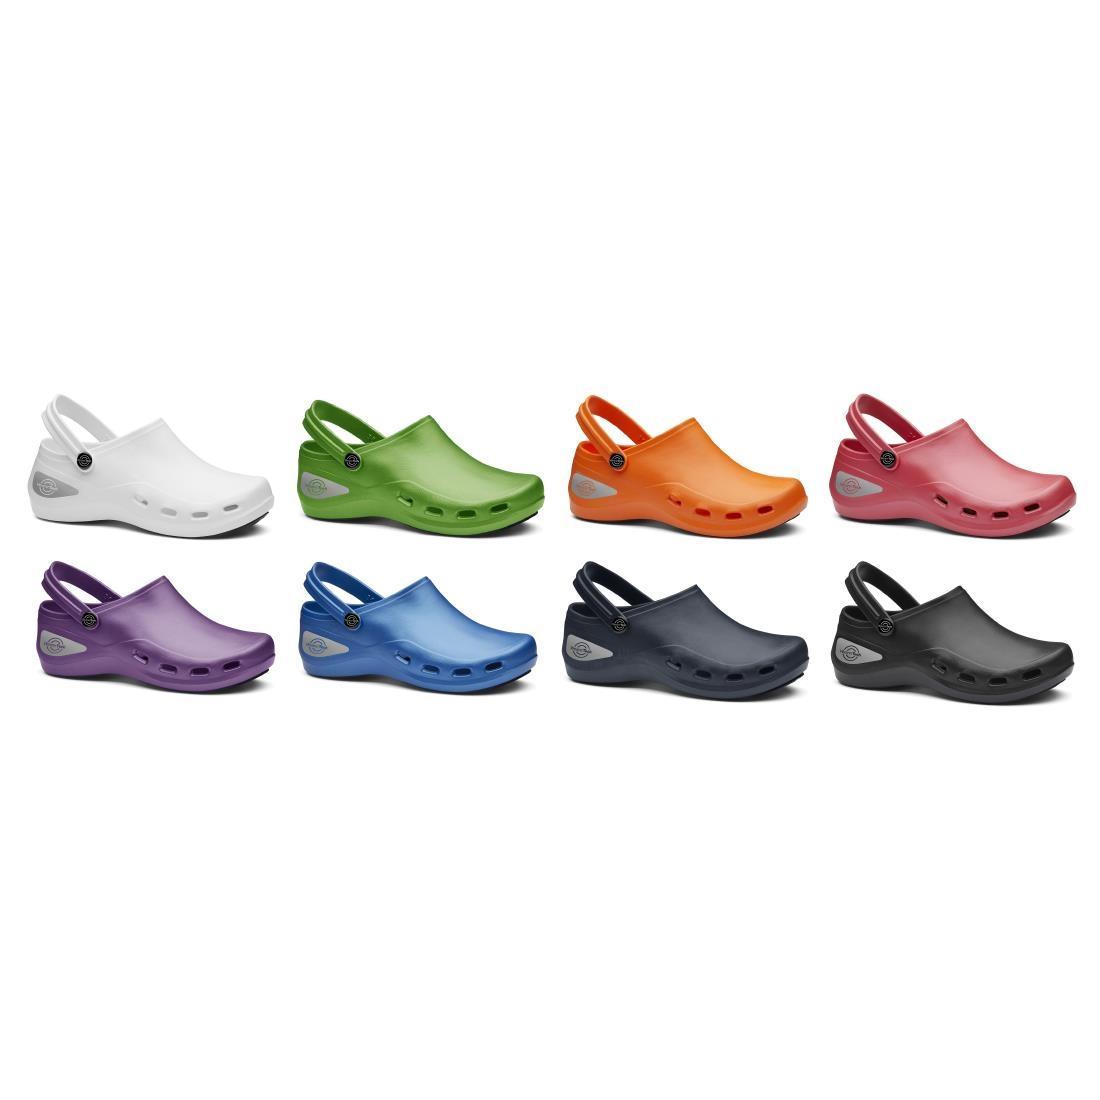 WearerTech Unisex Invigorate White Safety Shoe Size 6 - BB199-39.5  - 7